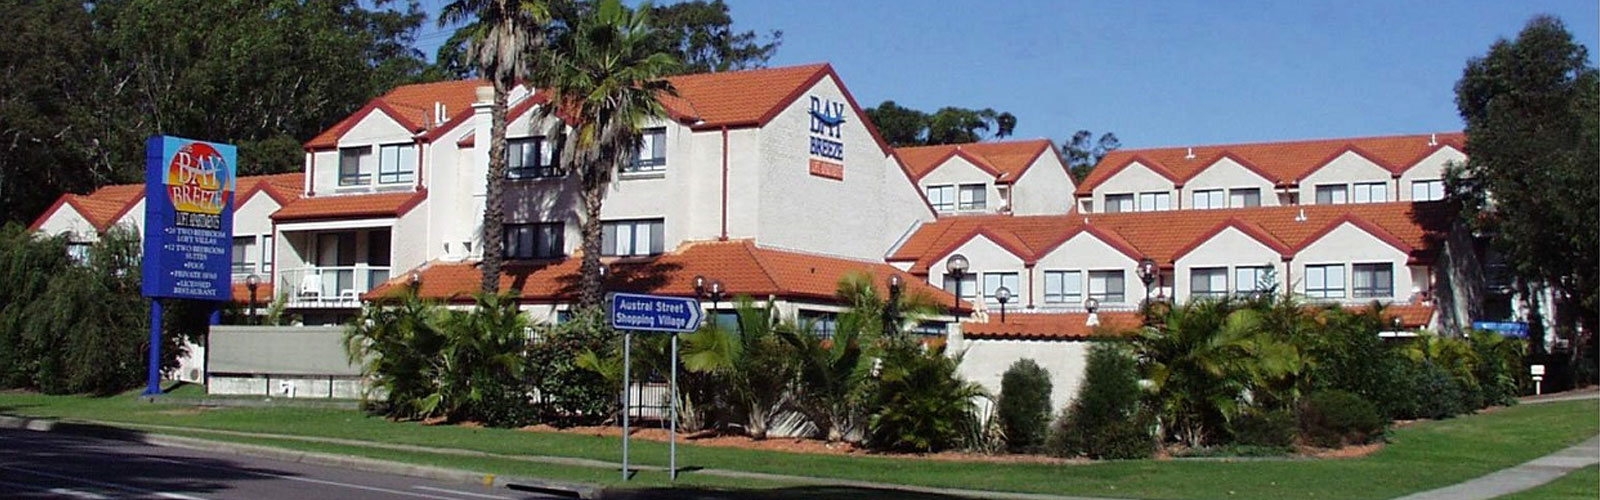 Nelson Bay Breeze Apartments